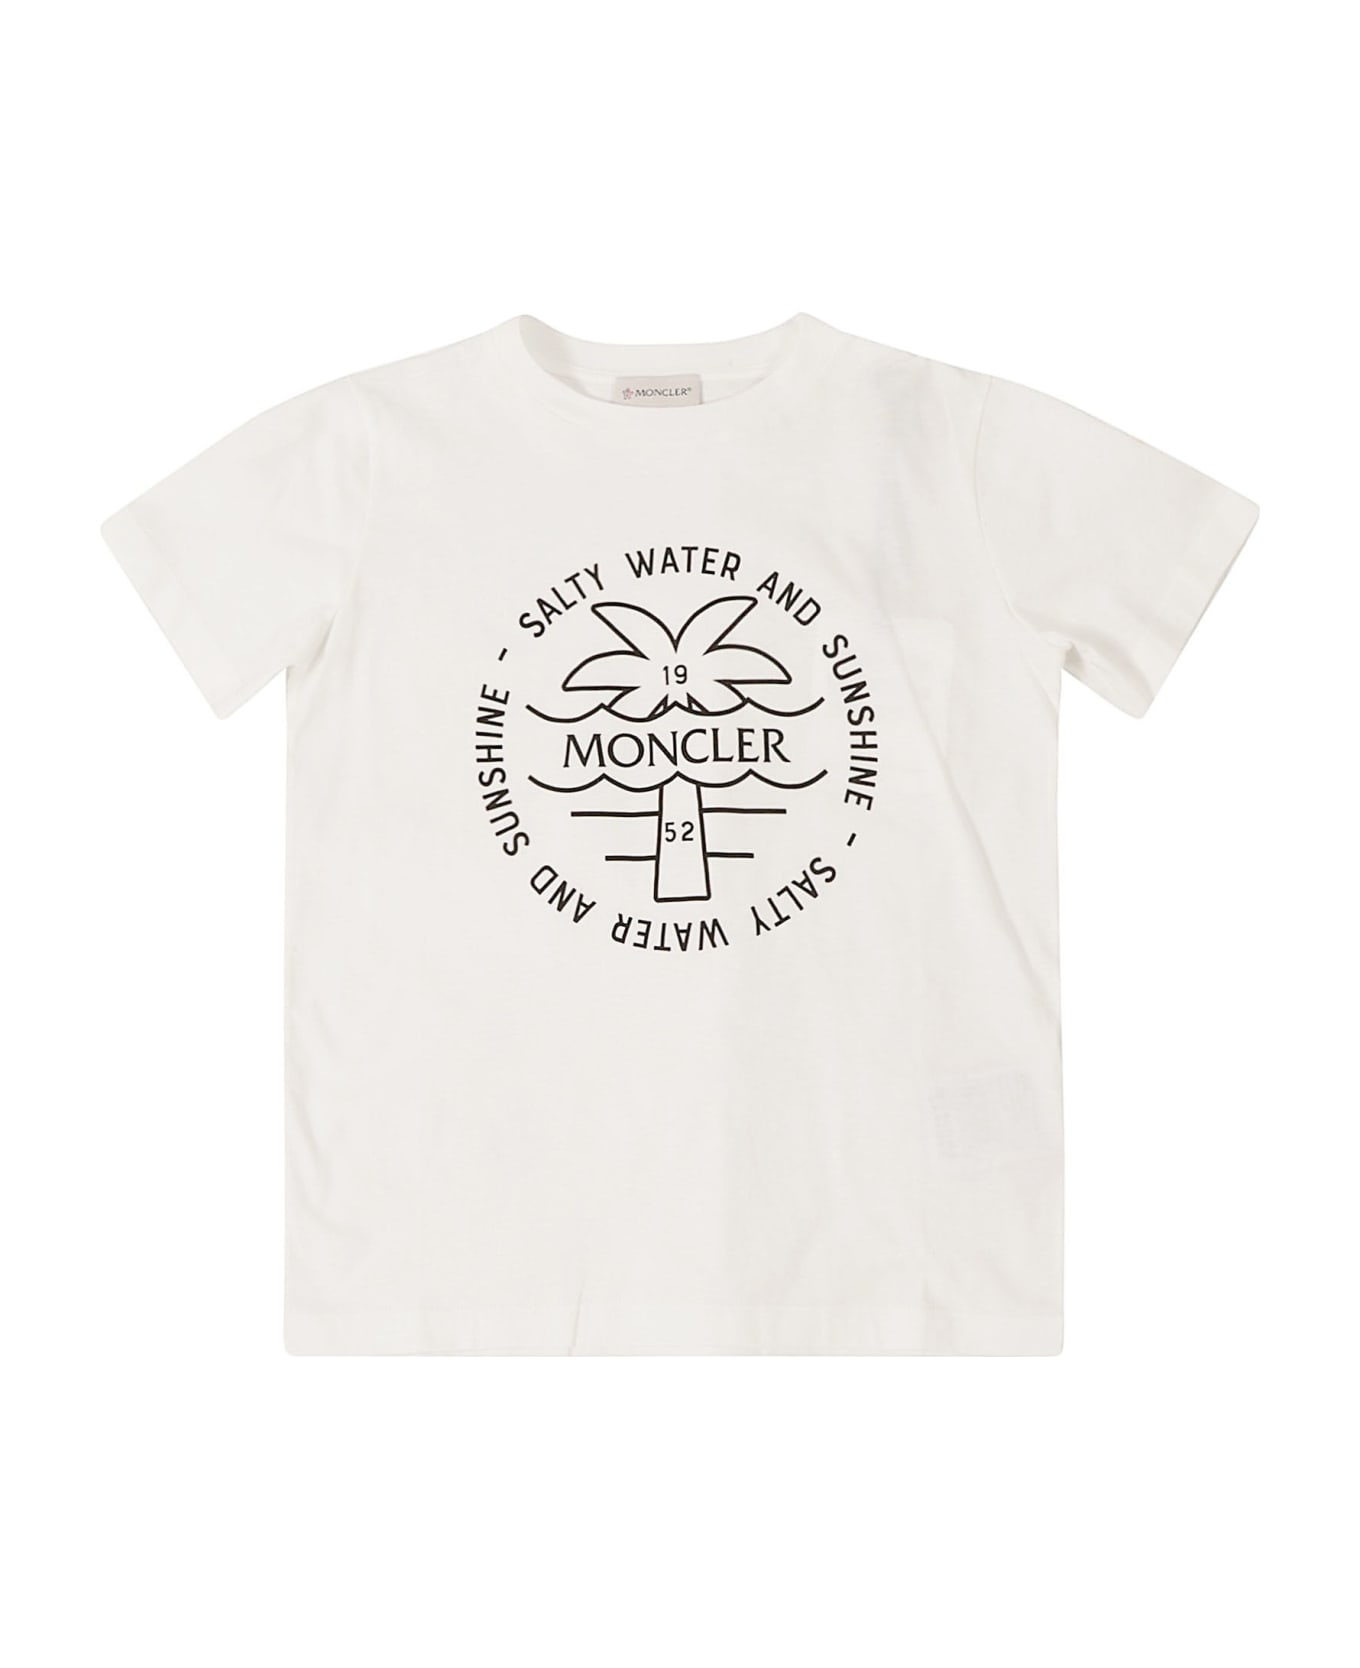 Moncler Salty Water T-shirt - Natural